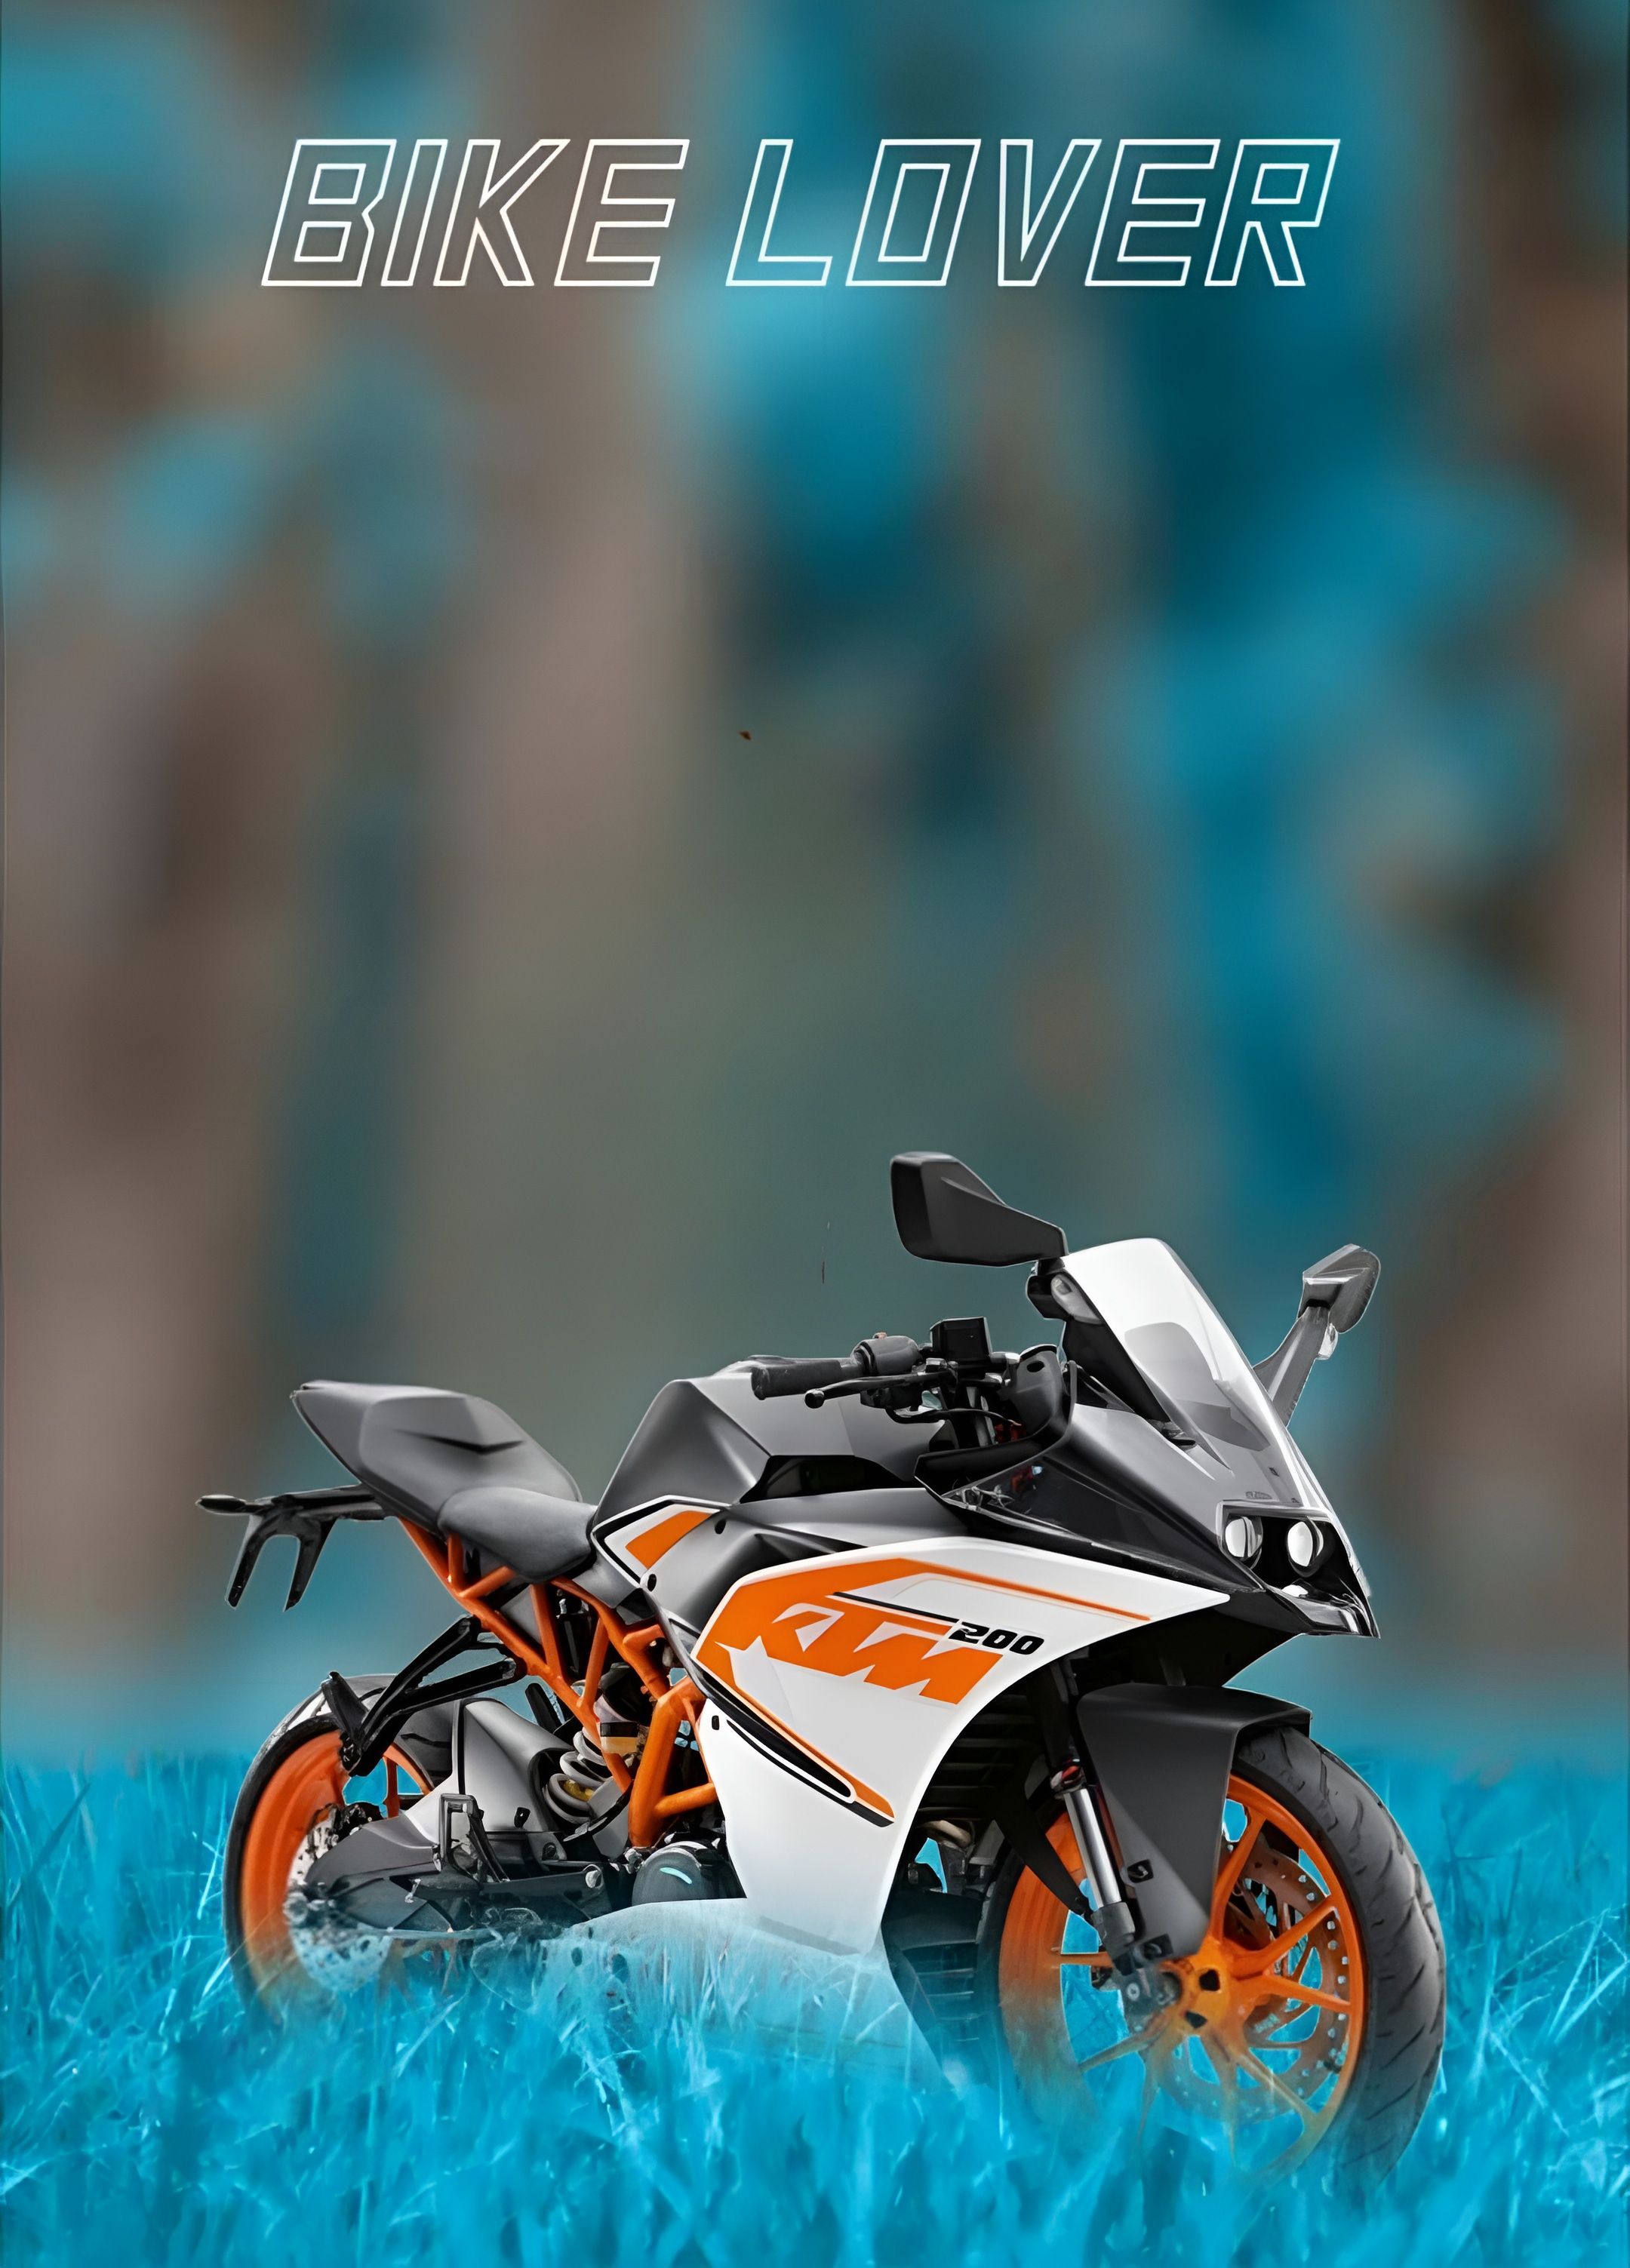 KTM Bike Background Photo Editing Image HD 